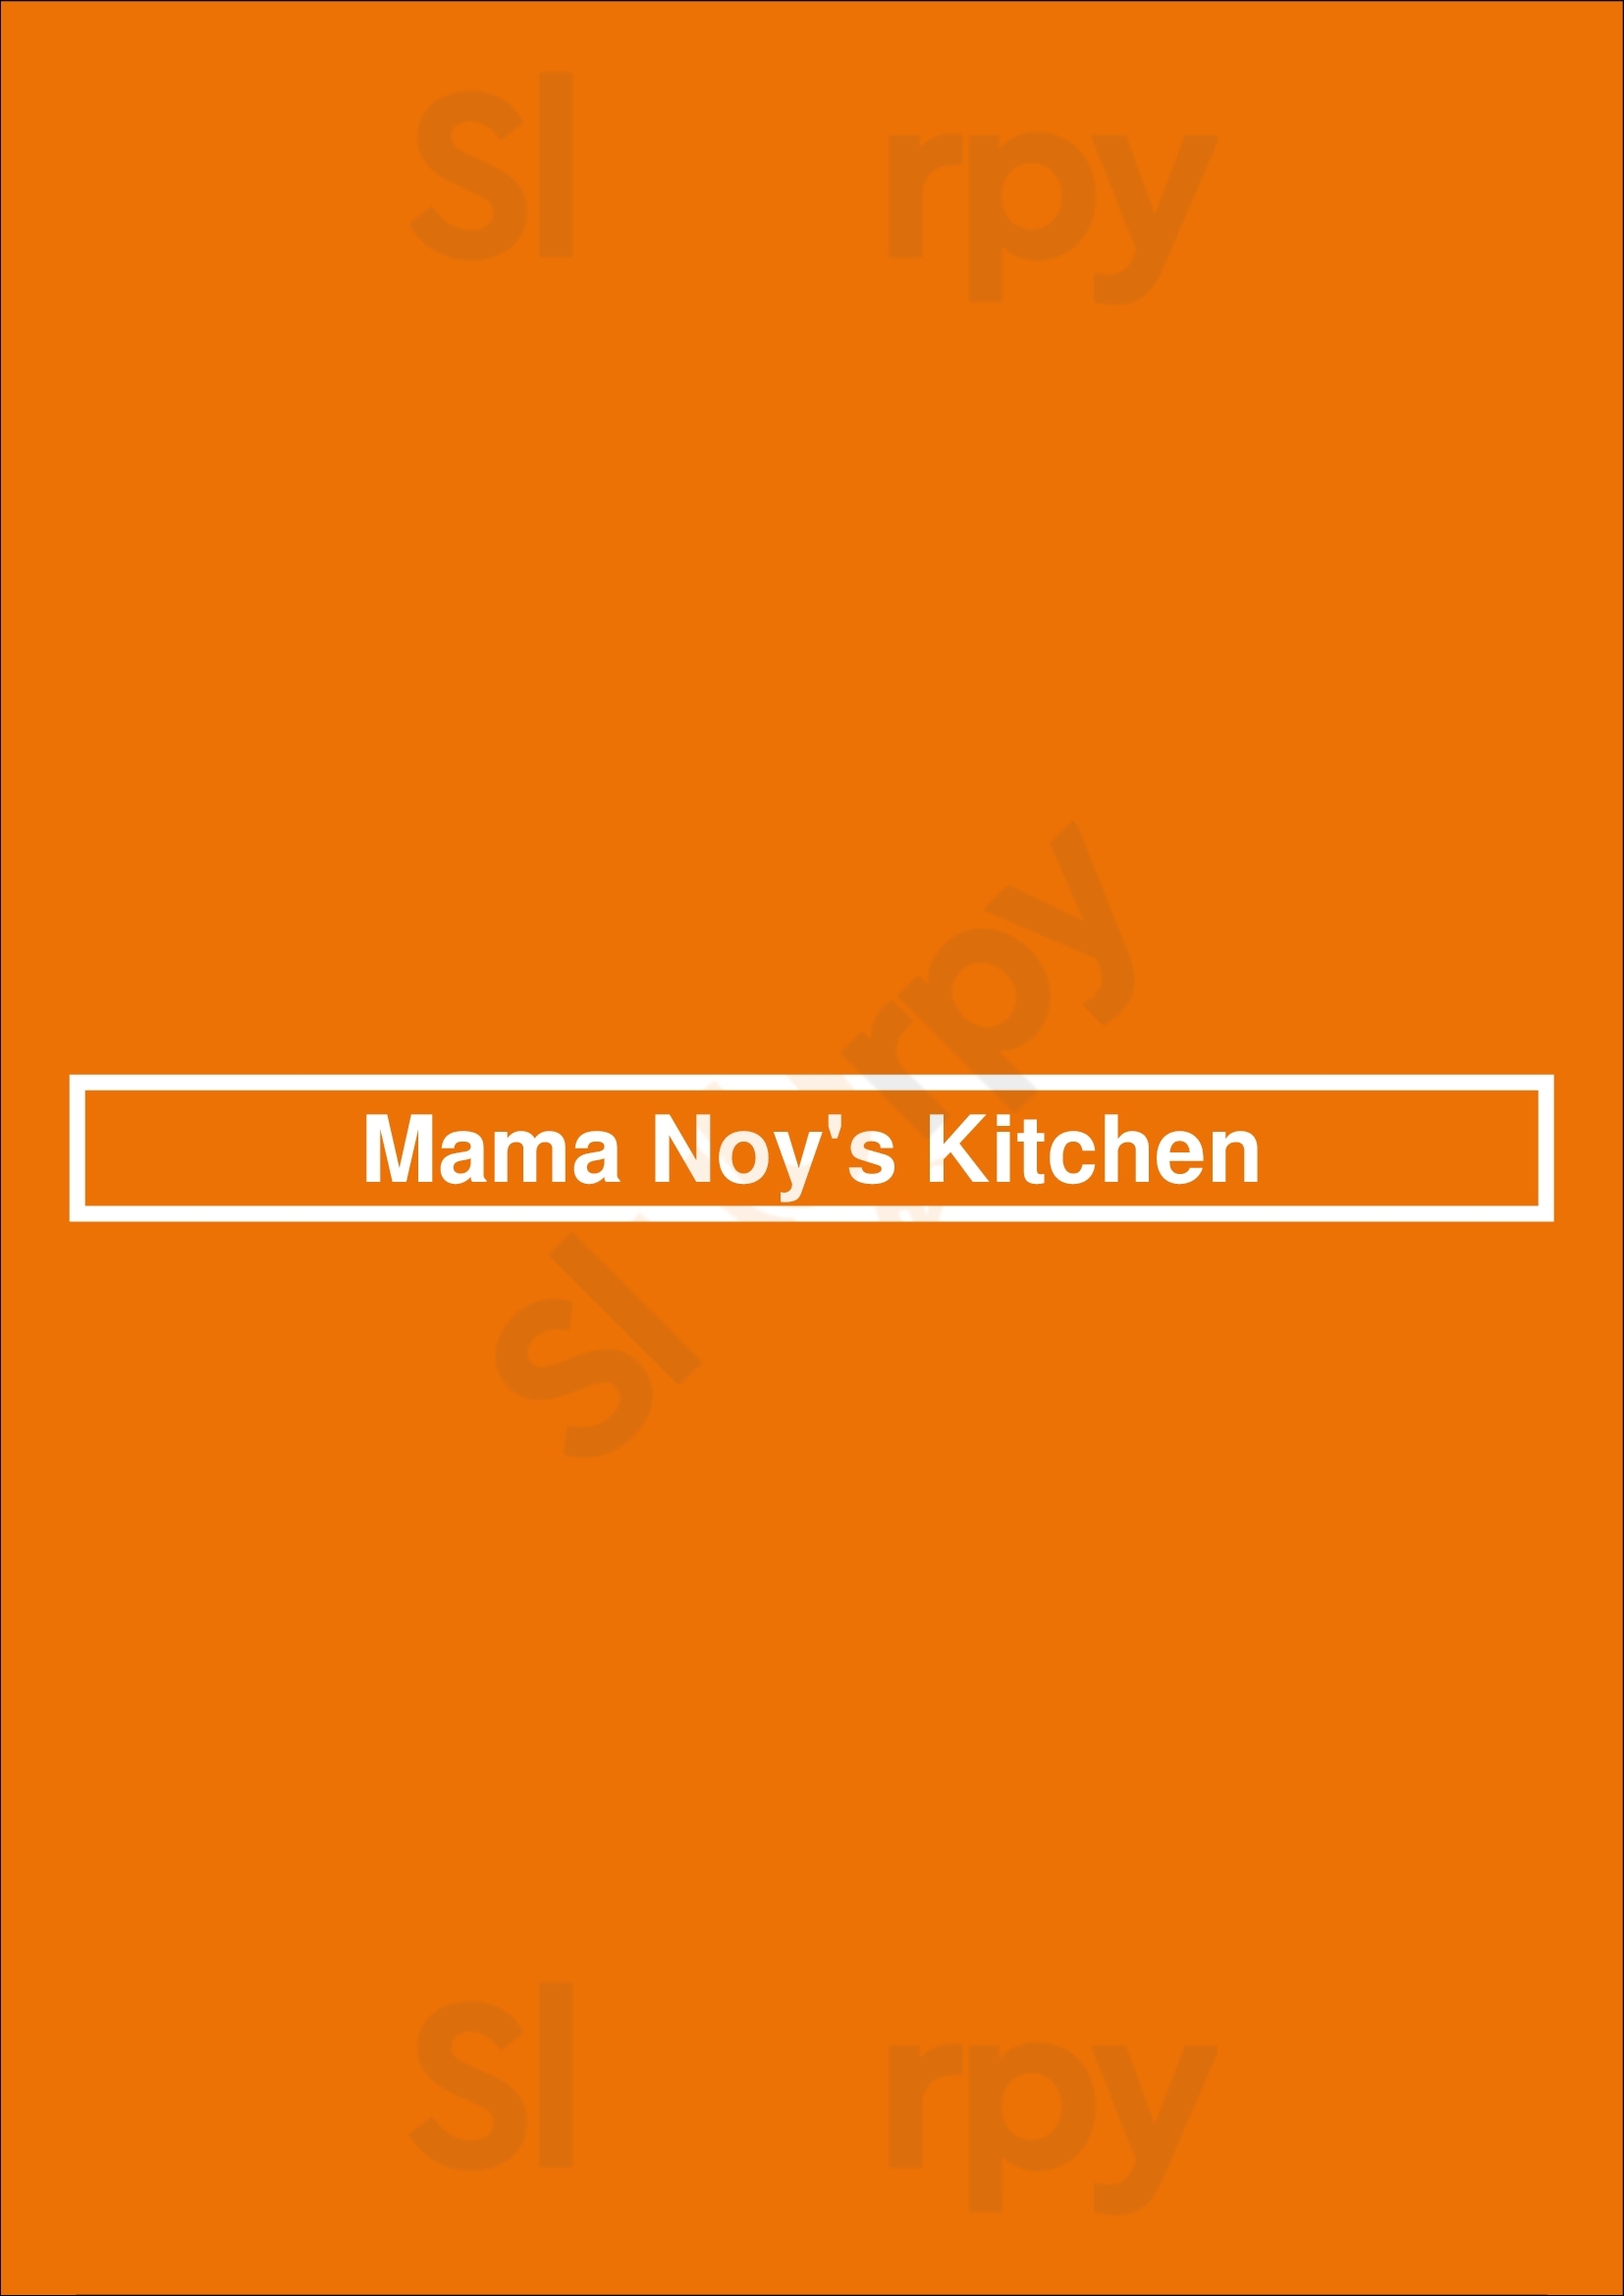 Mama Noy's Kitchen Austin Menu - 1